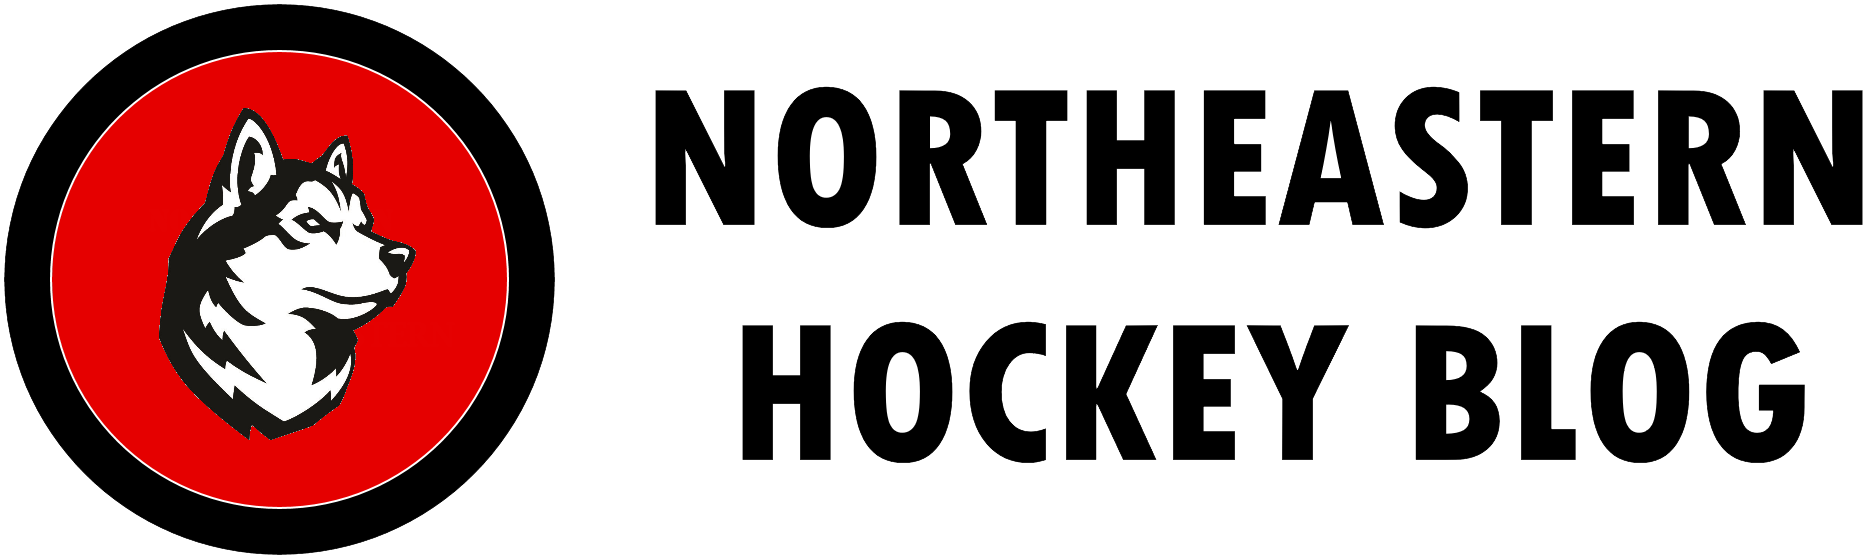 The Northeastern Hockey Blog